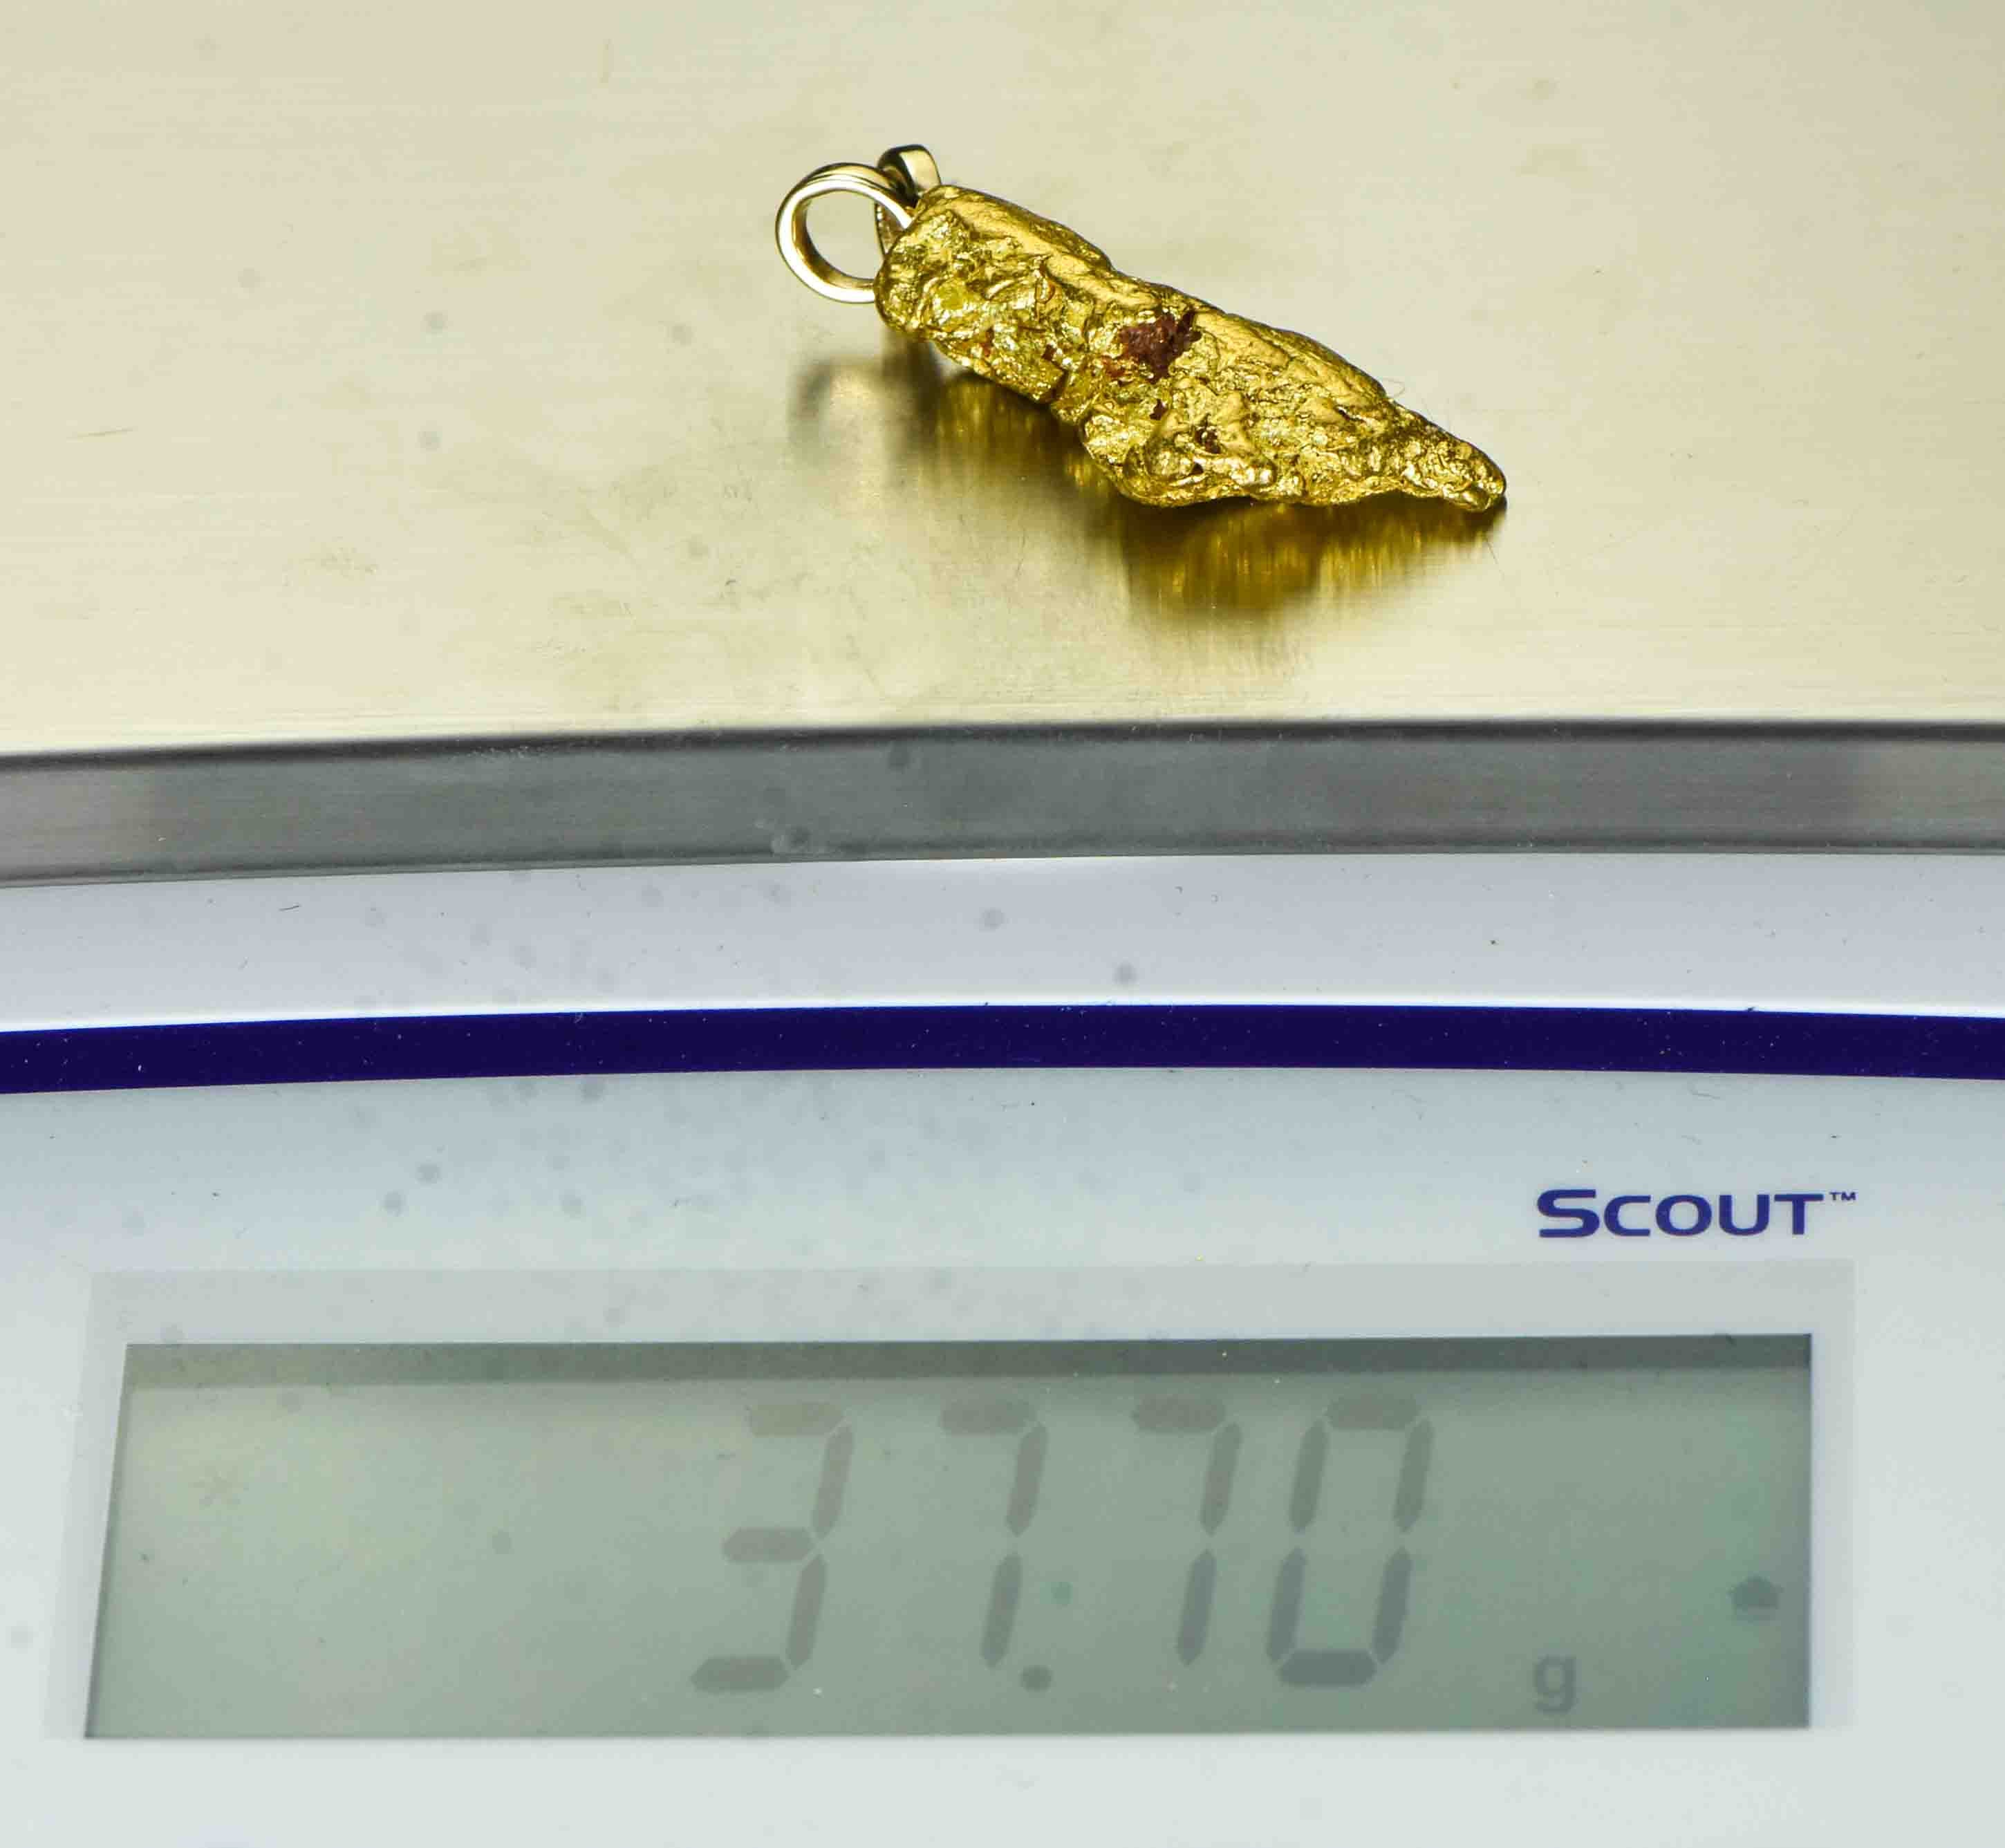 #560 Alaskan-Yukon BC Natural Gold Nugget Pendant 37.70 Grams Authentic